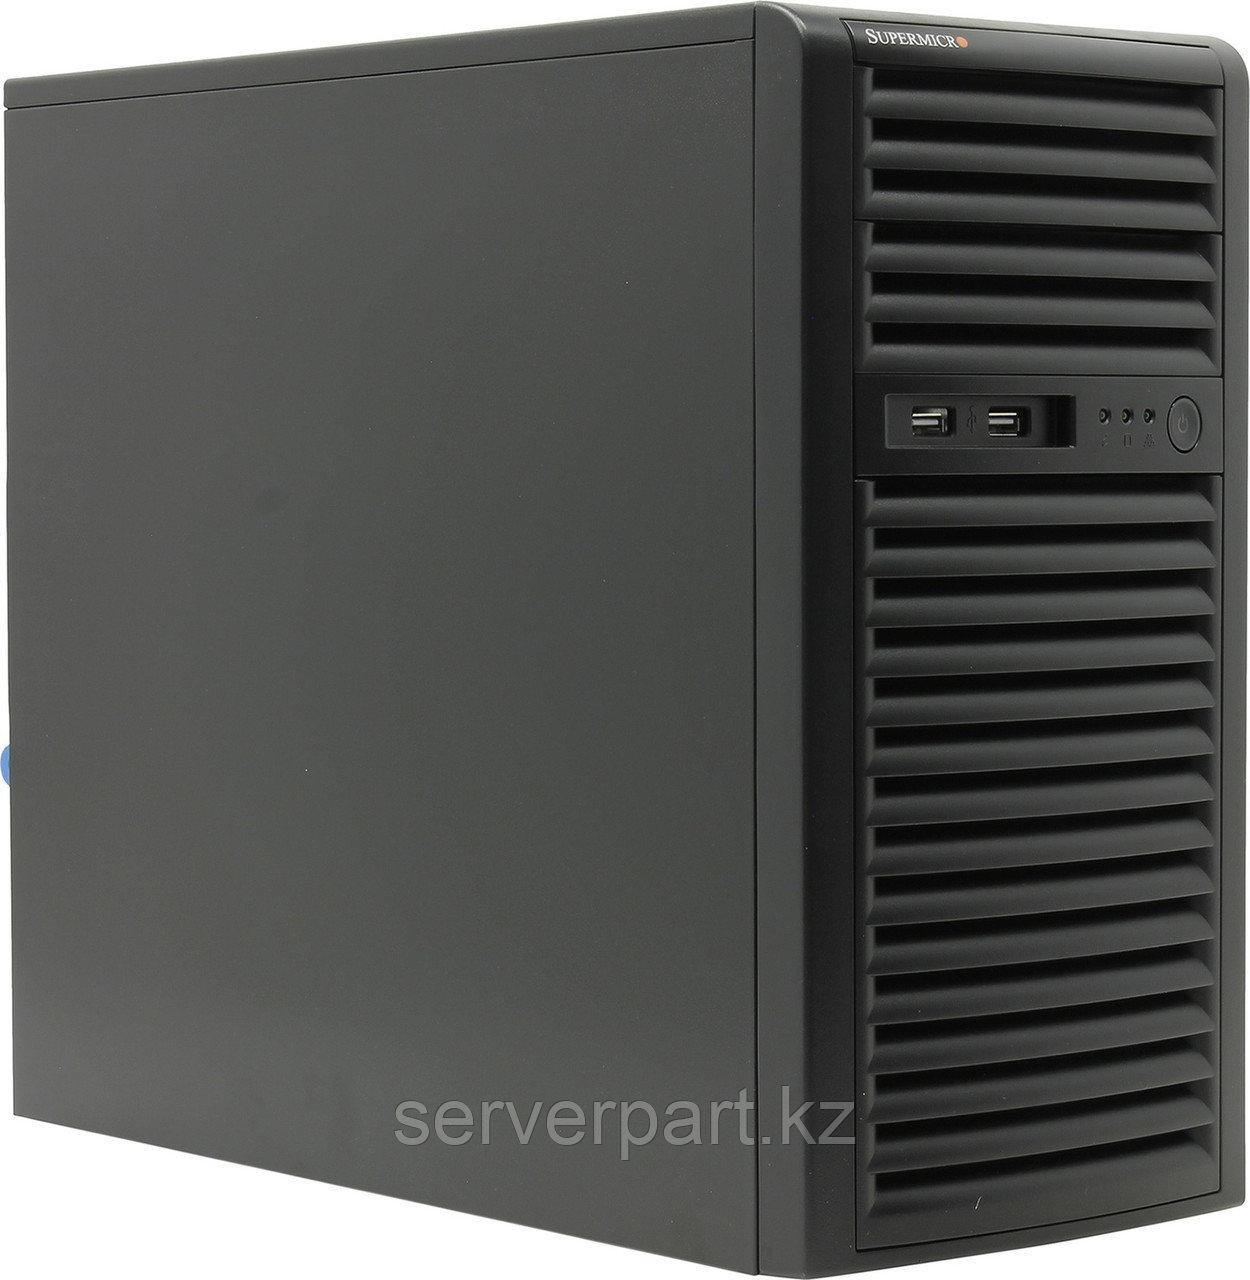 Сервер Supermicro SYS-5039C (Tower 4LFF)/4-core intel xeon E2224 (3.4GHz)/32GB EUDIMM, фото 1